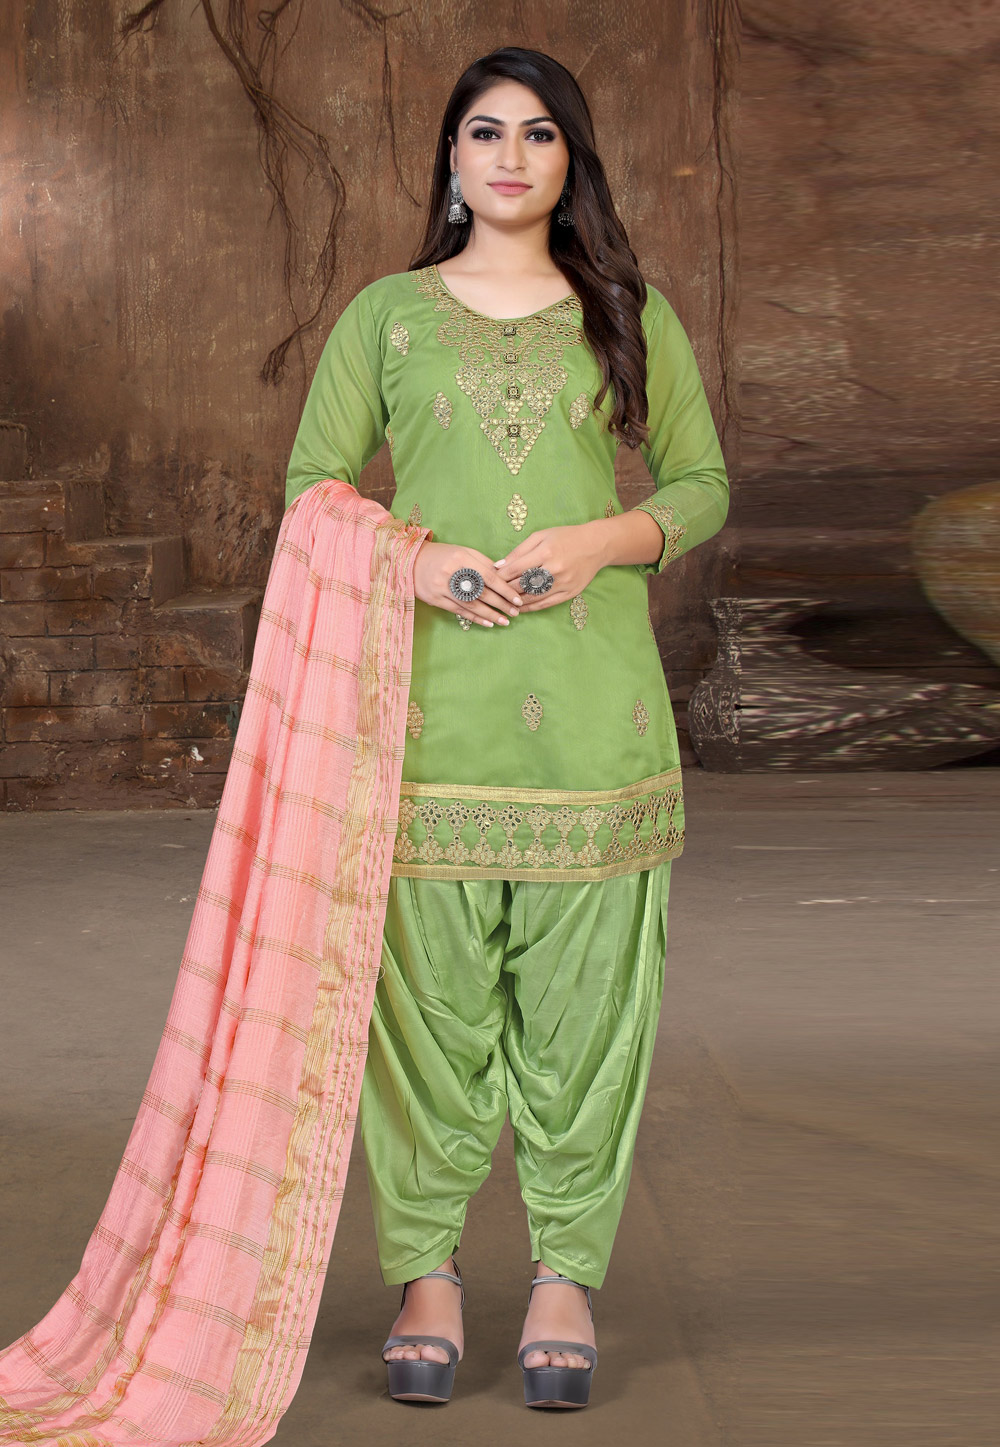 Buy the latest Designer Punjabi Suits Online in USA